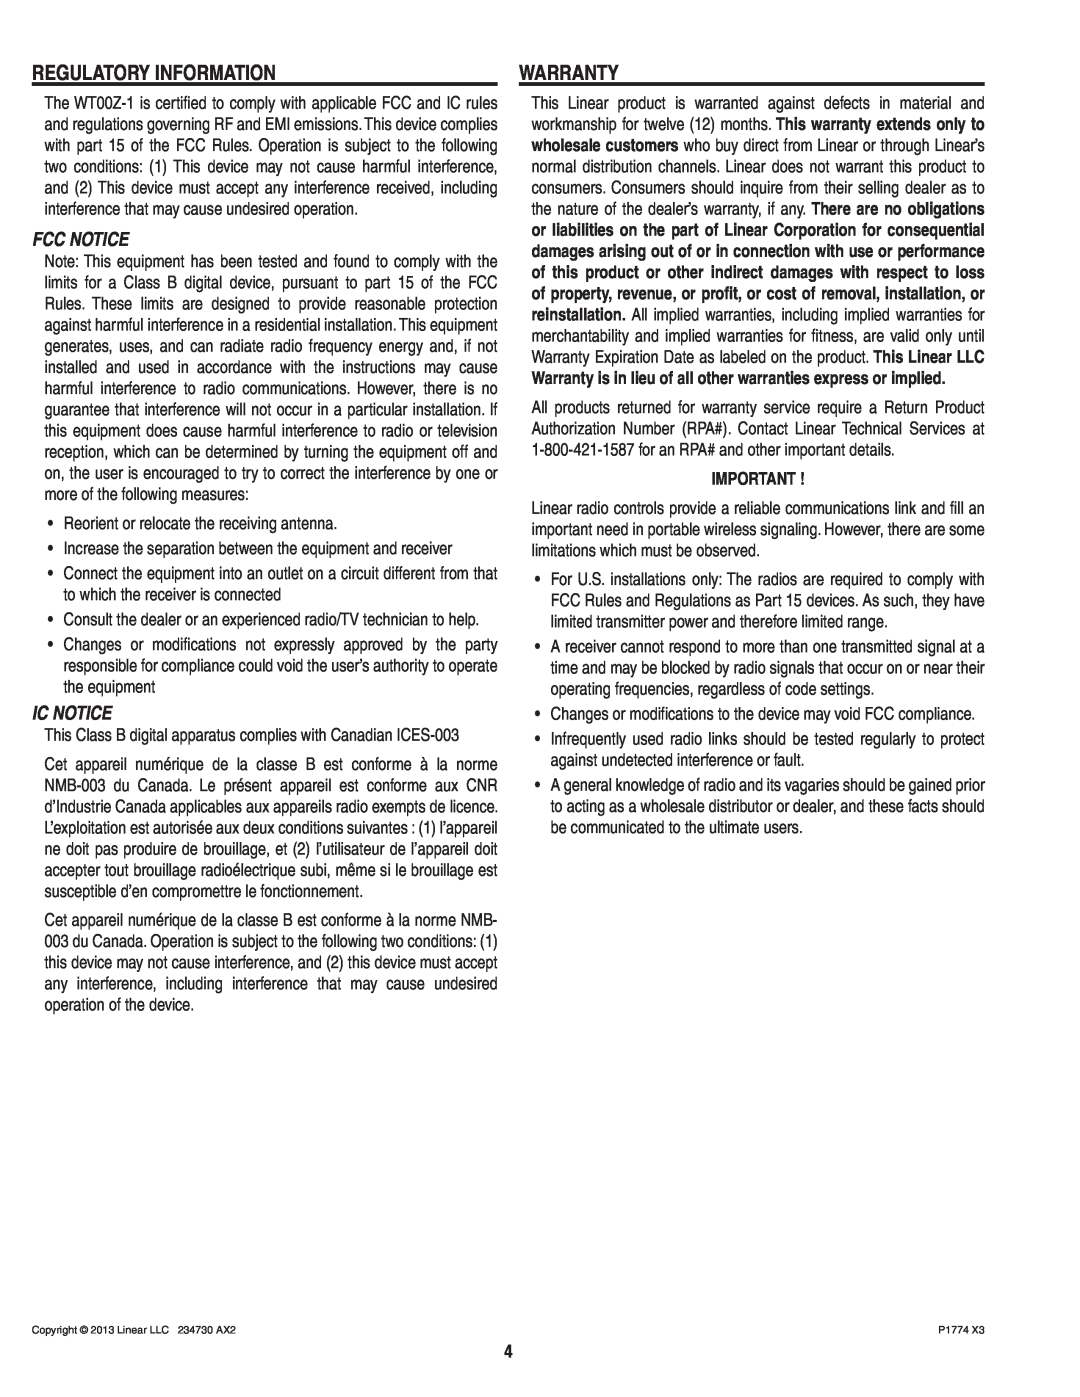 Linear wt00z-1 manual Regulatory Information, Warranty, Fcc Notice, Ic Notice 